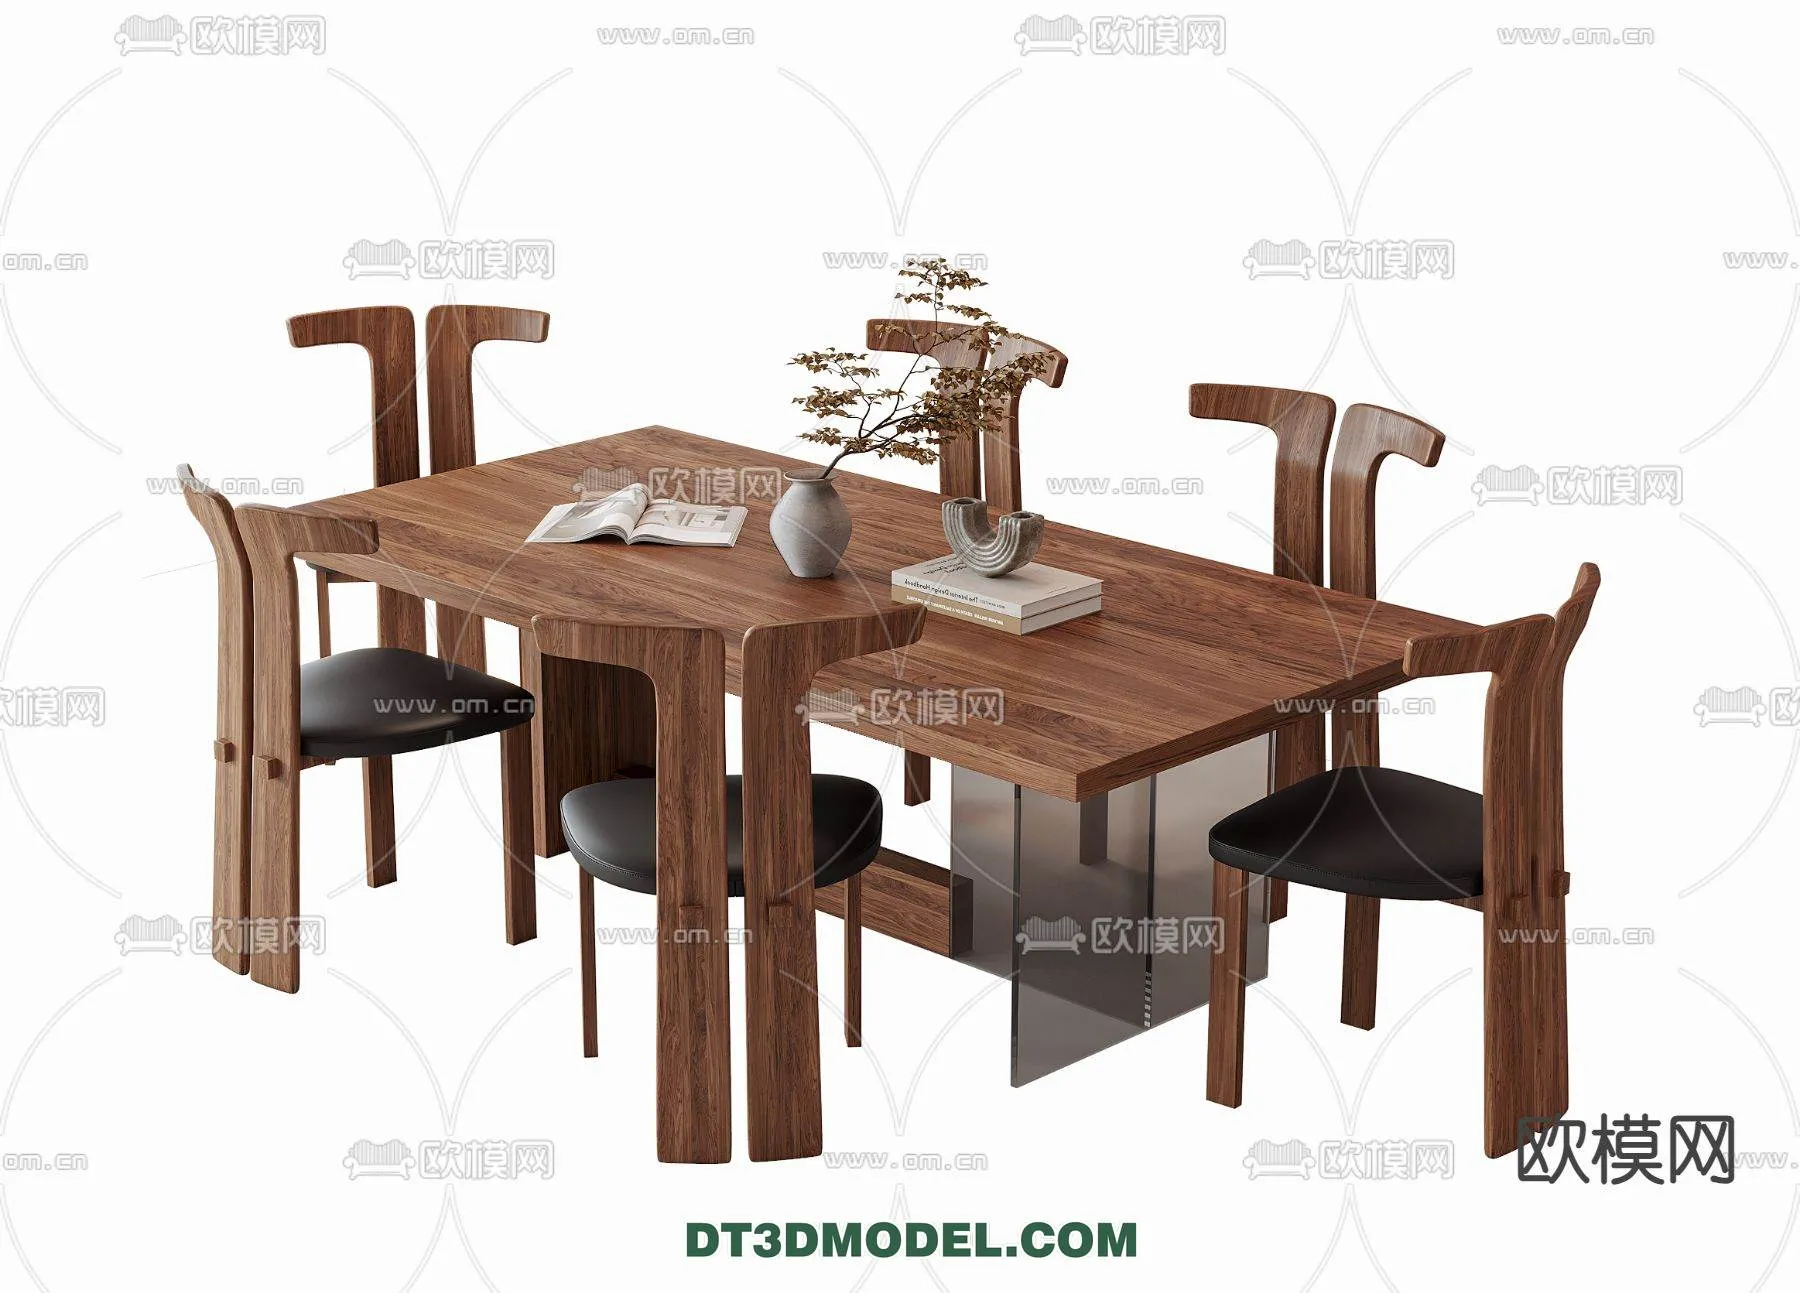 WABI SABI STYLE 3D MODELS – DINING TABLE – 0097